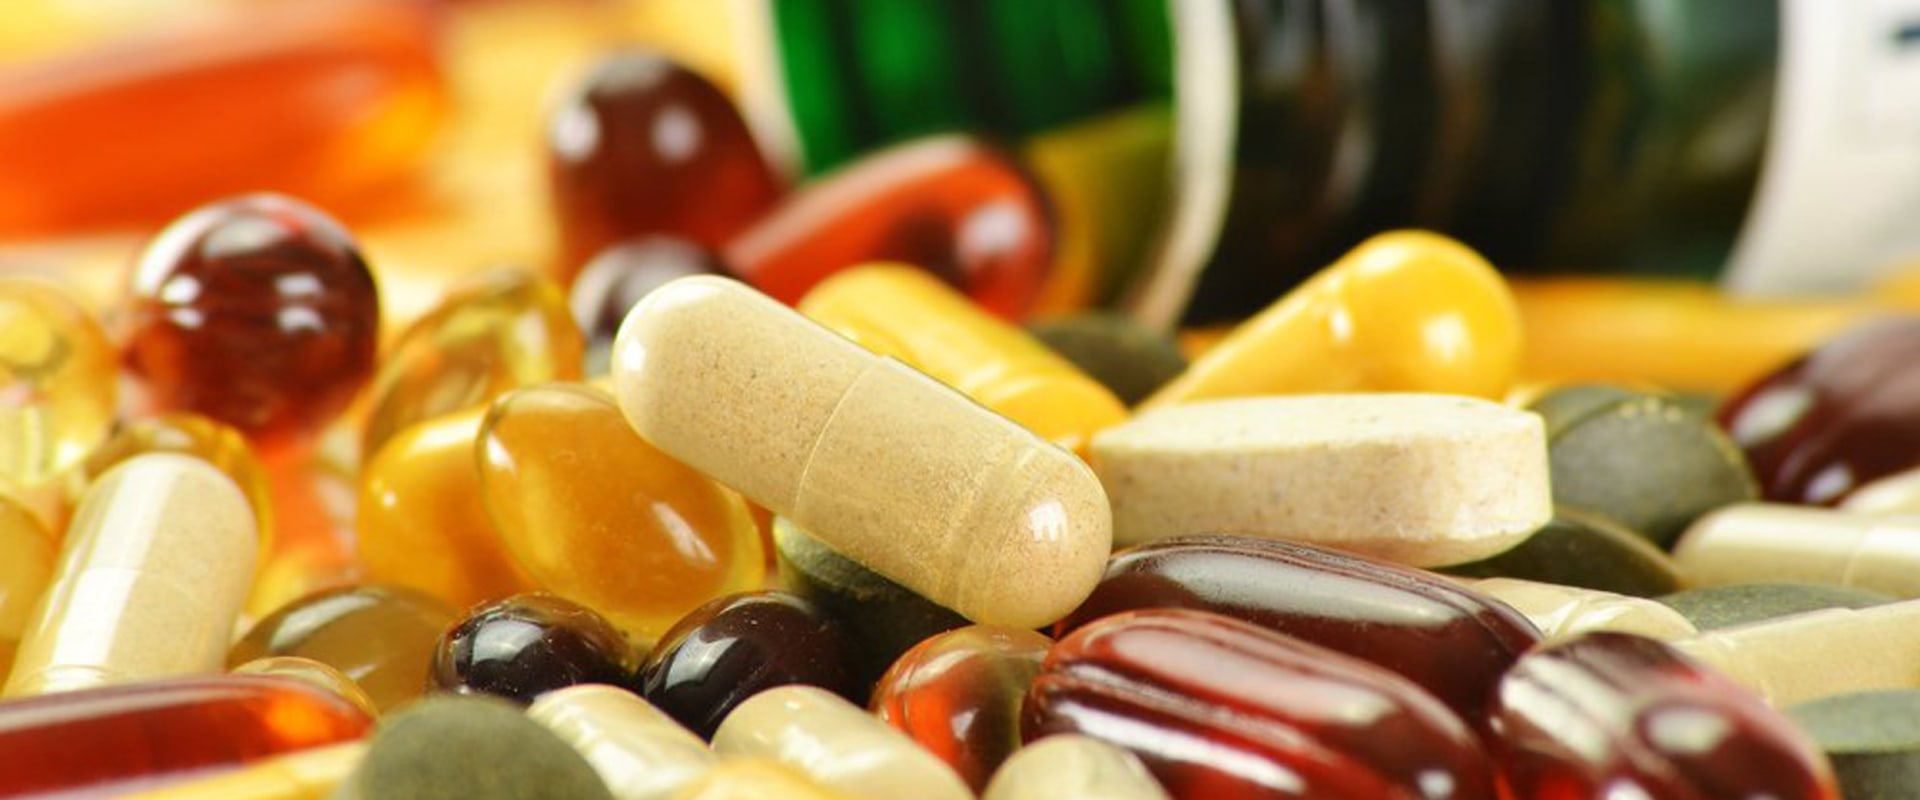 Does fda regulate ingredients in supplements?